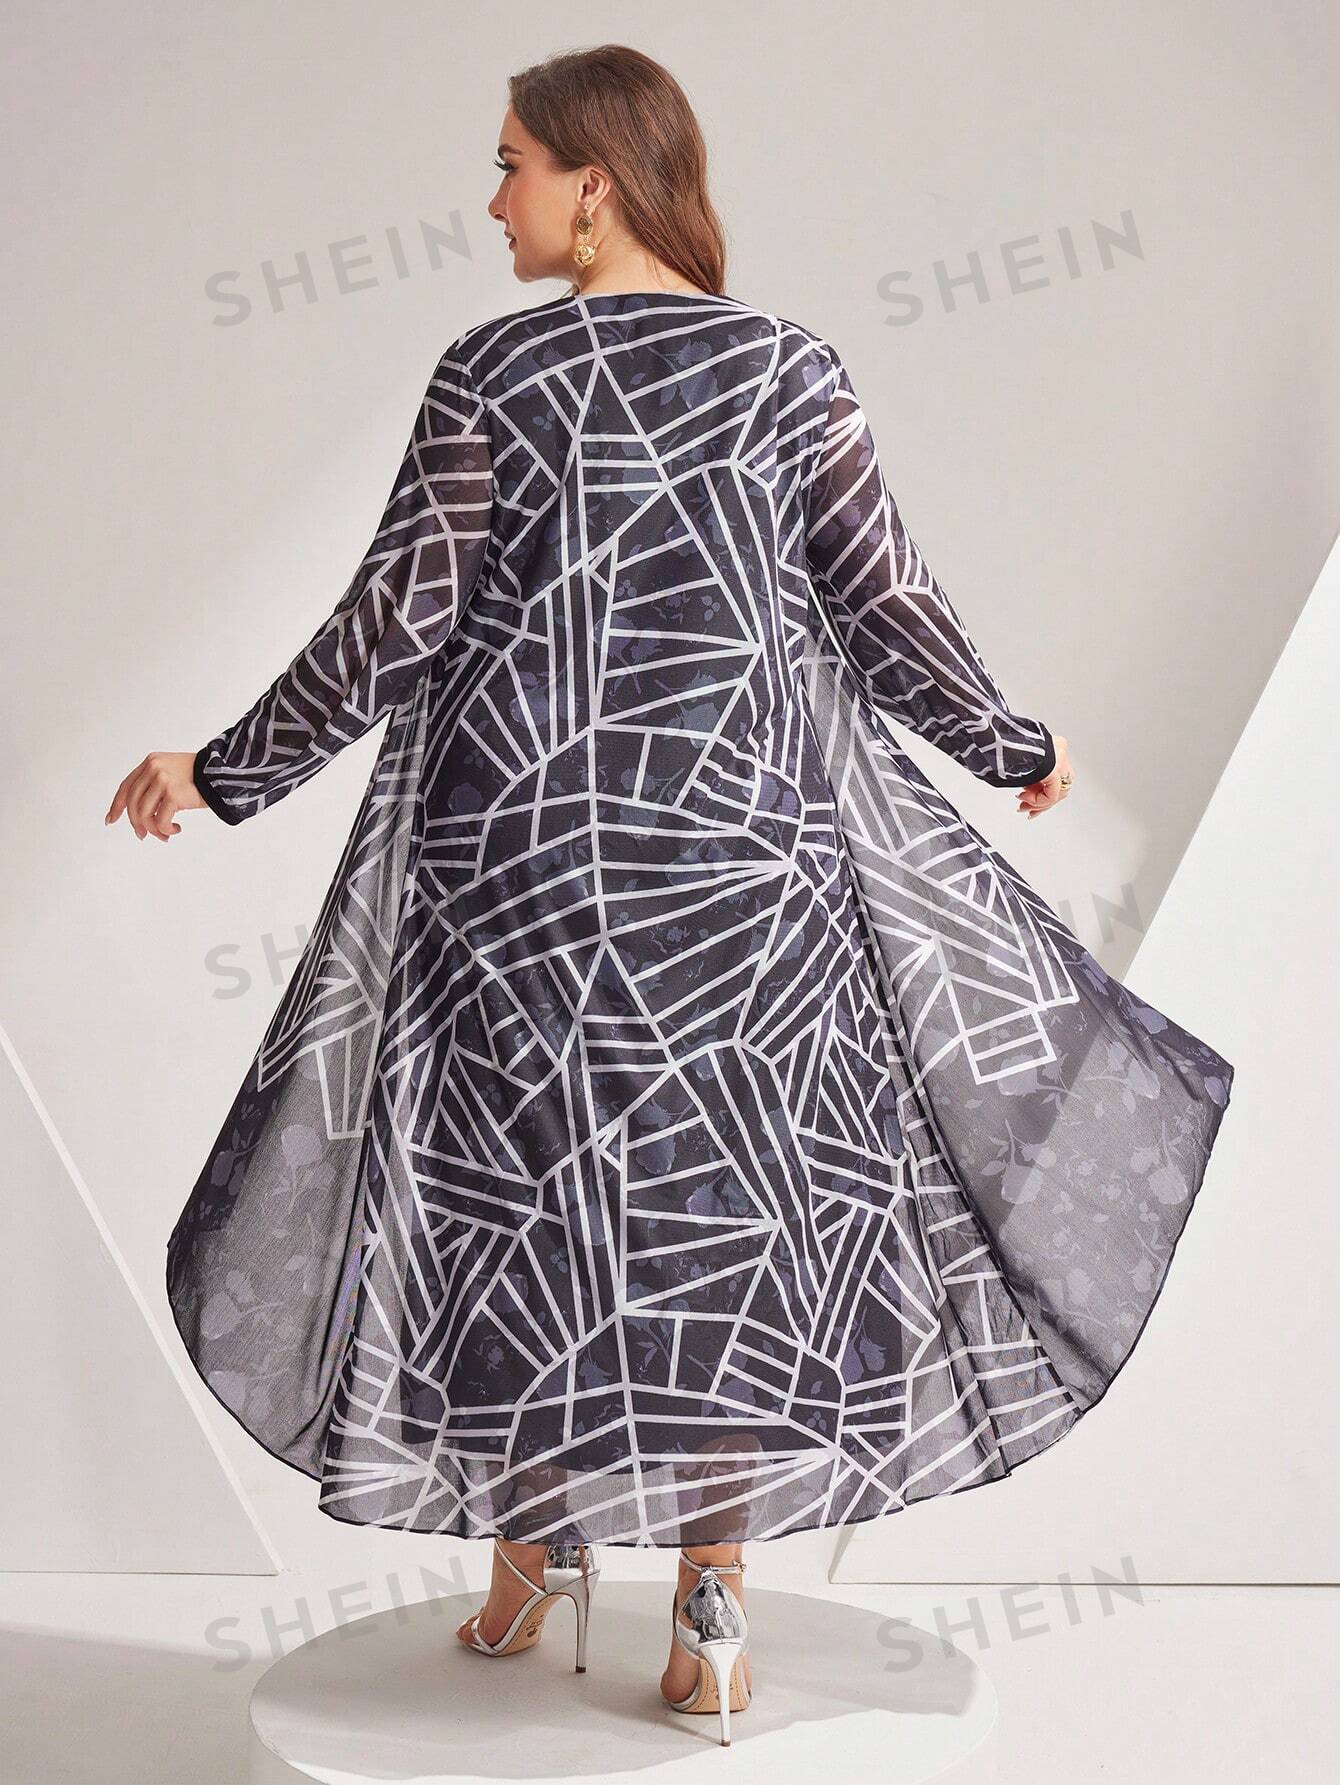 SHEIN Modely Women's Plus Size Patchwork Printed Dress - Negative Apparel